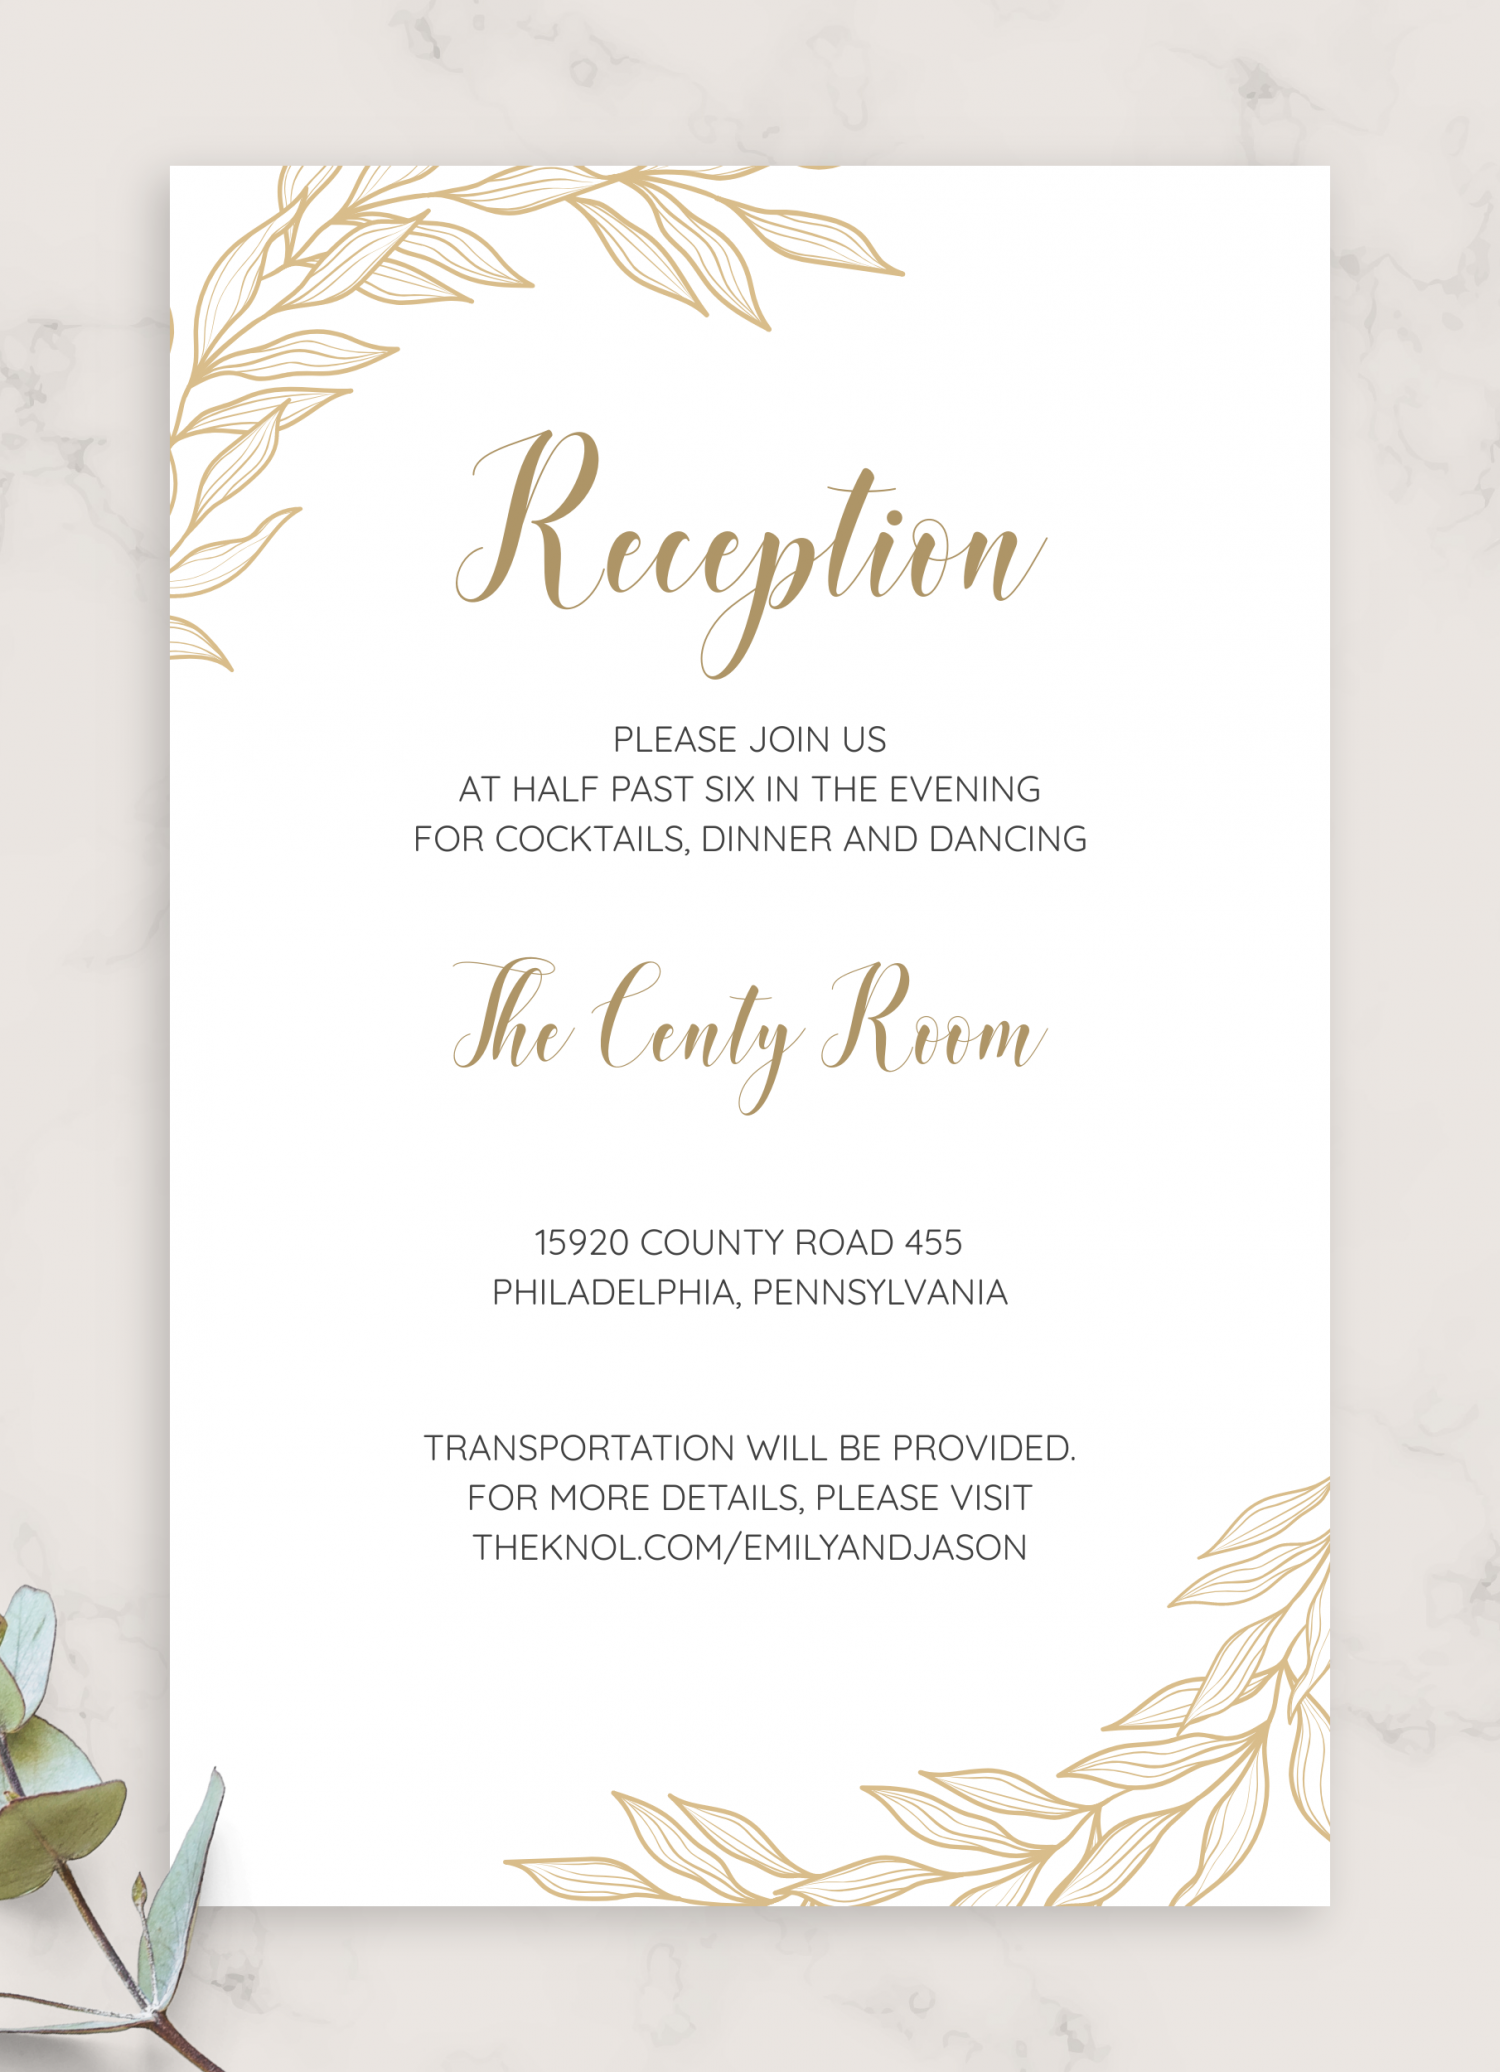 Wedding Hotel Information Card Template